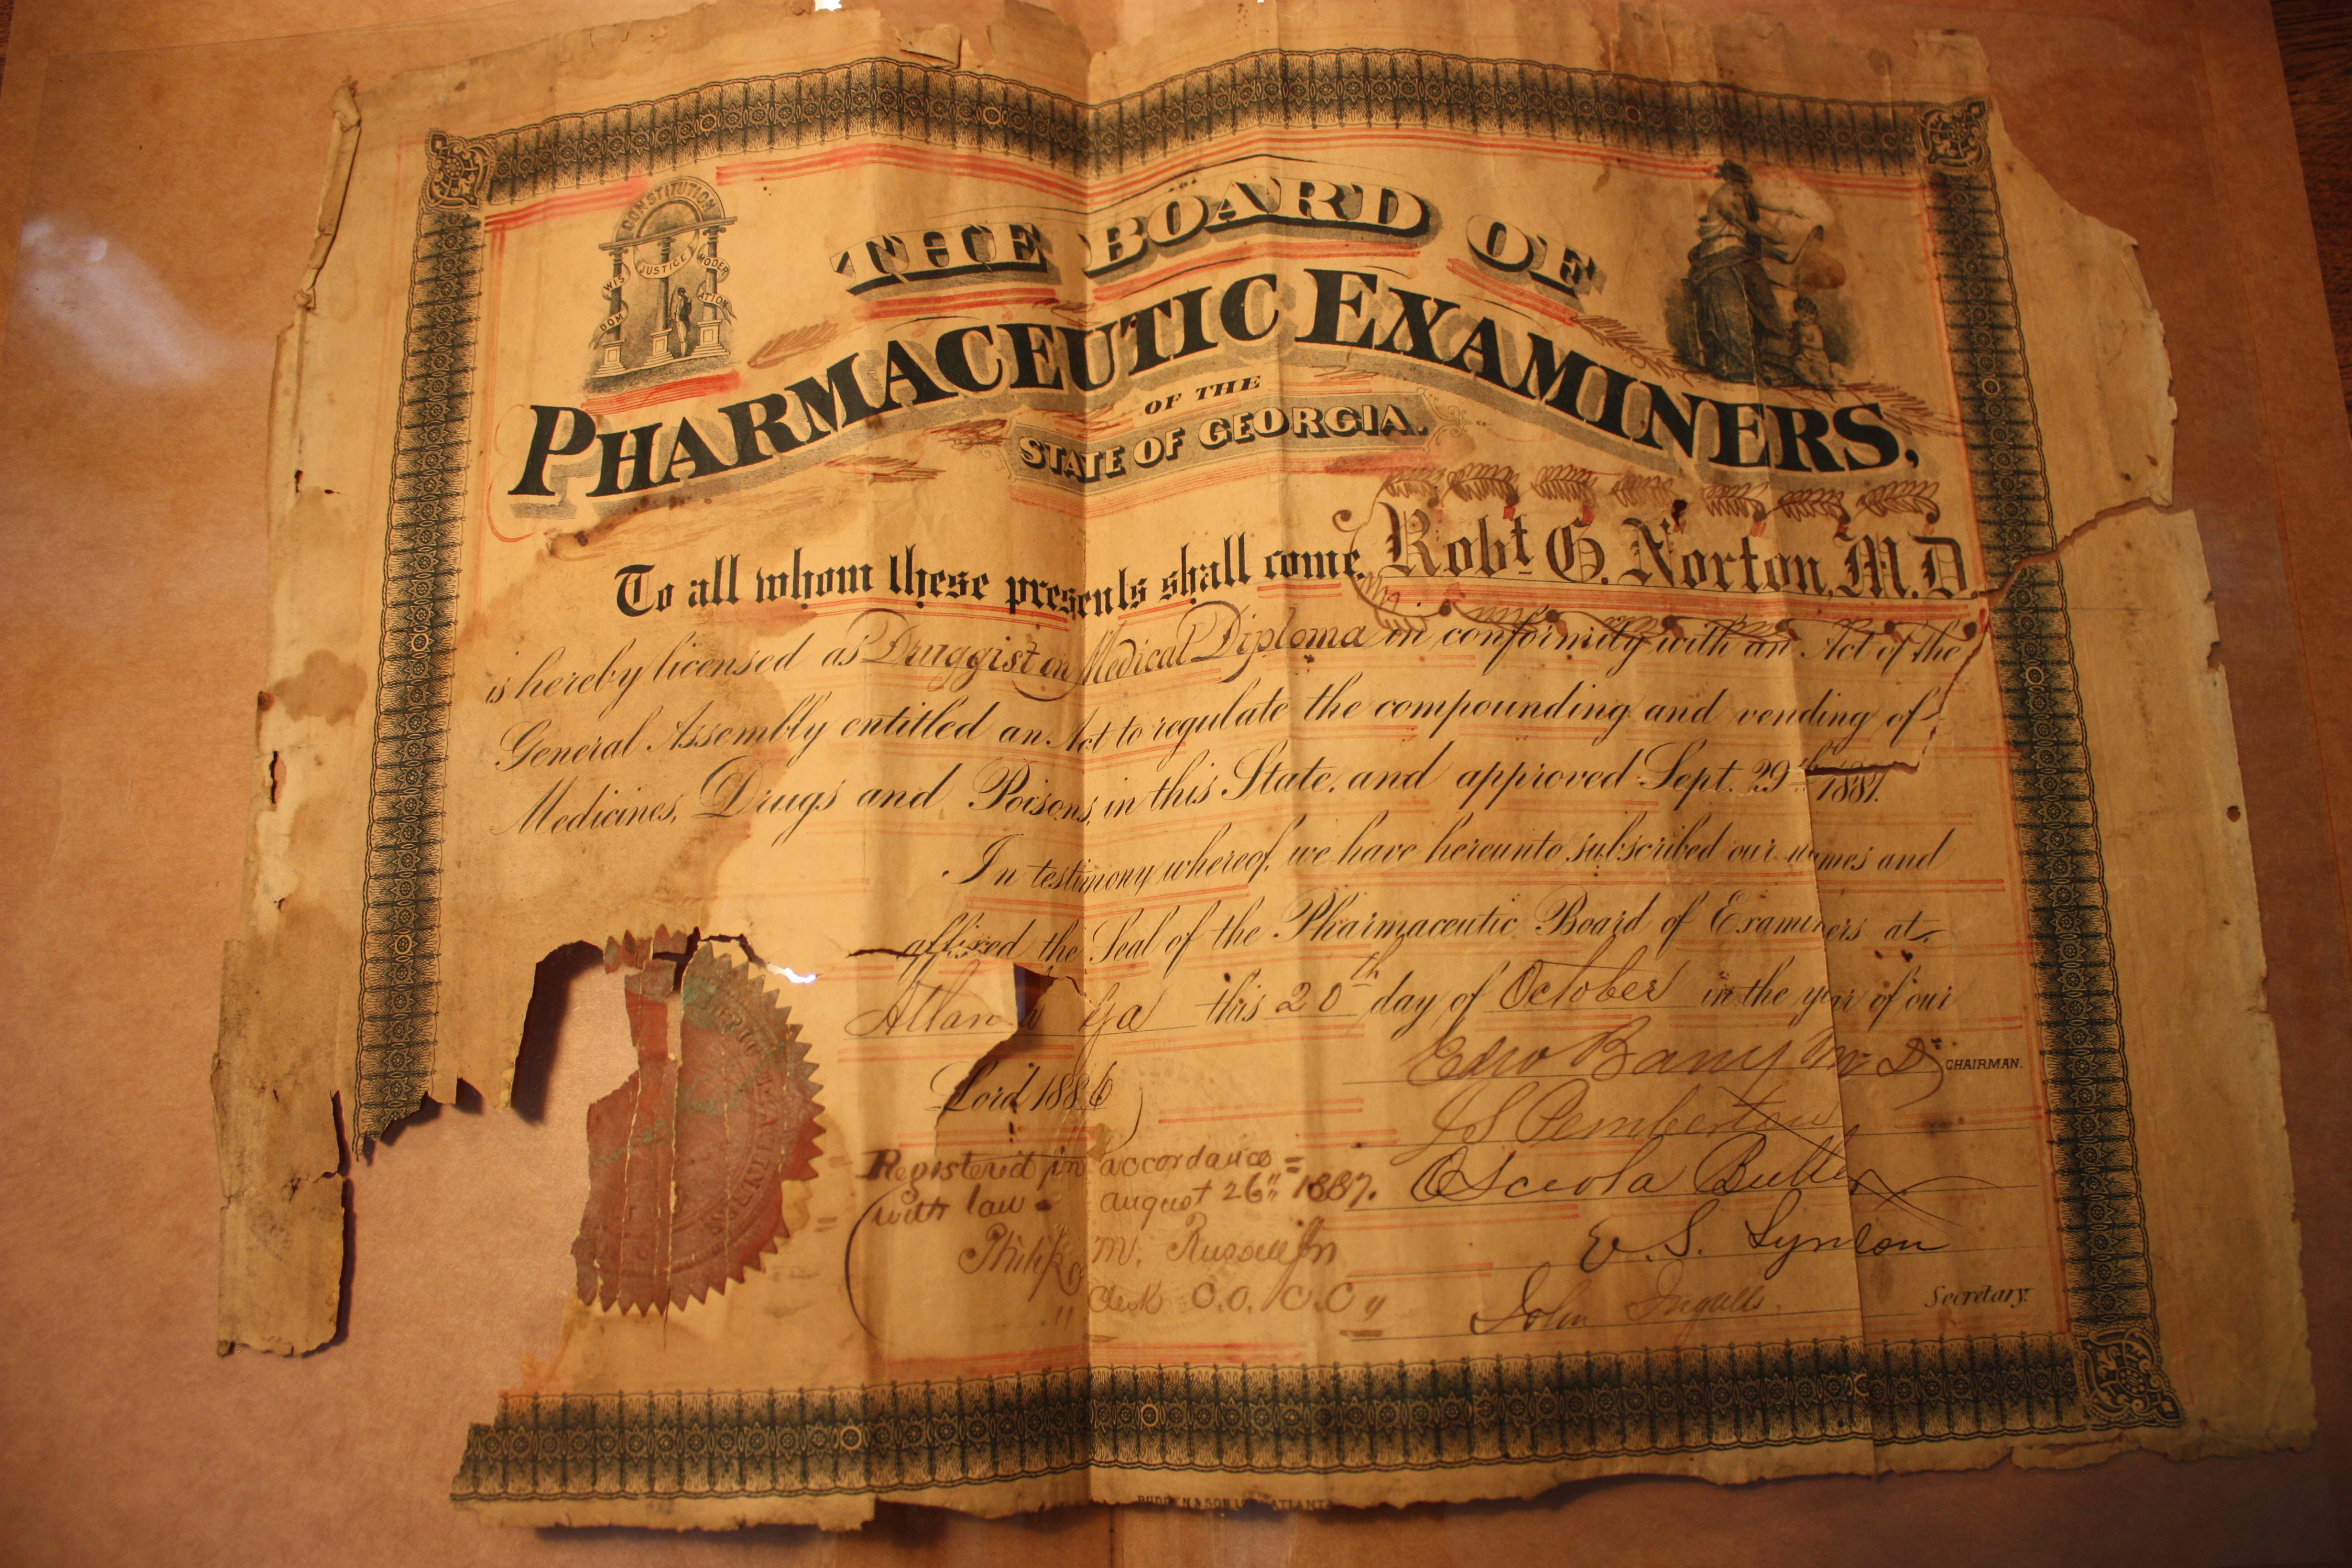 Robert Godfrey Norton's druggist license.